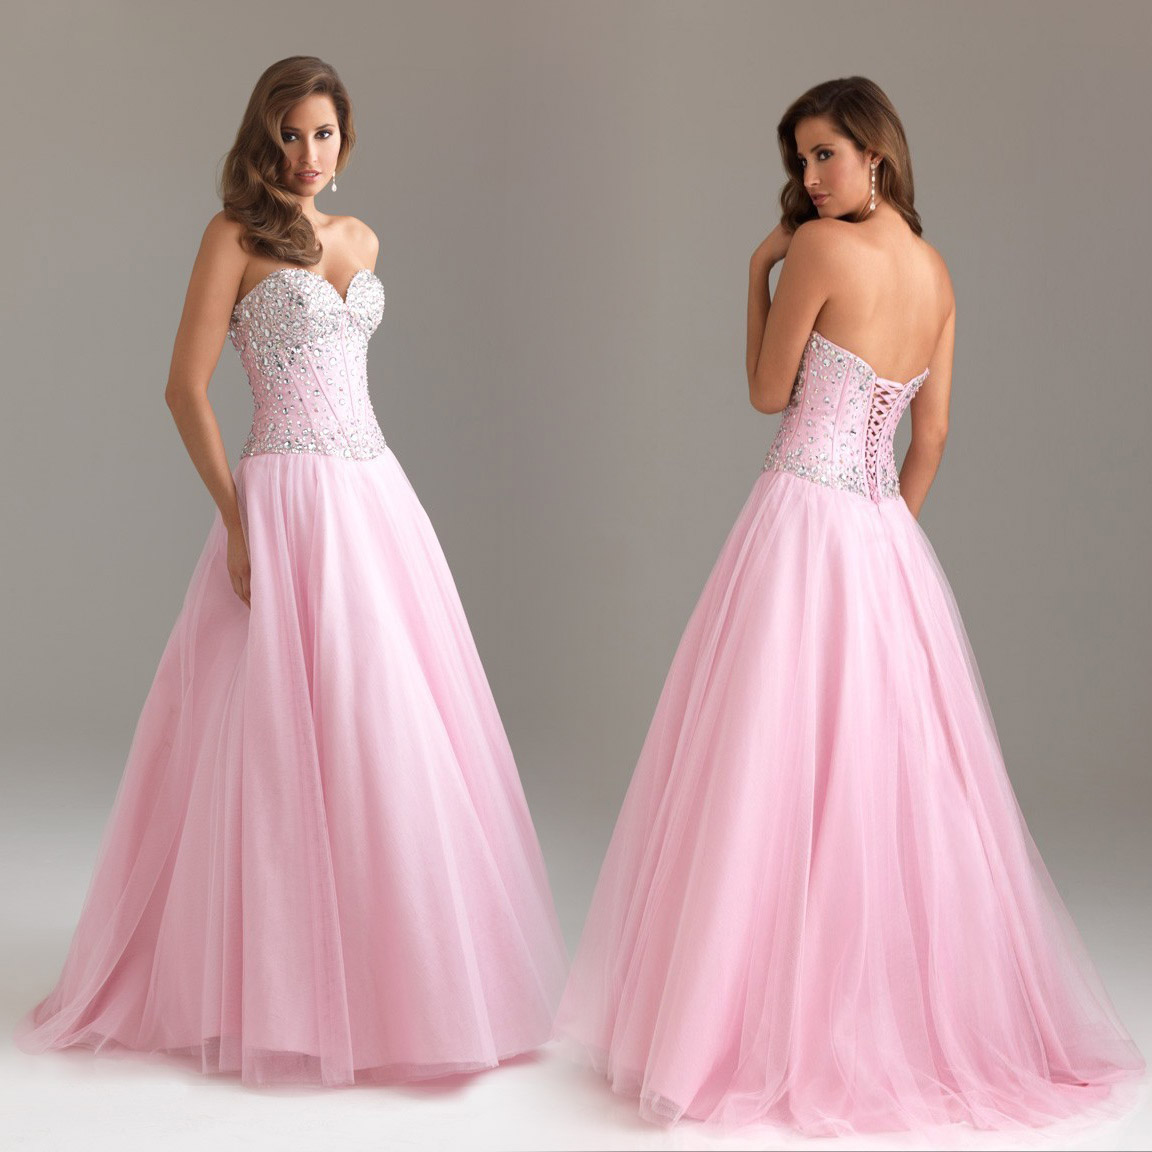 Pink Prom Dresses With Lace Up Back 2015 Dress Party Evening Elegant Formal Evening Gowns Dresses Vestido De Festa Lf1511